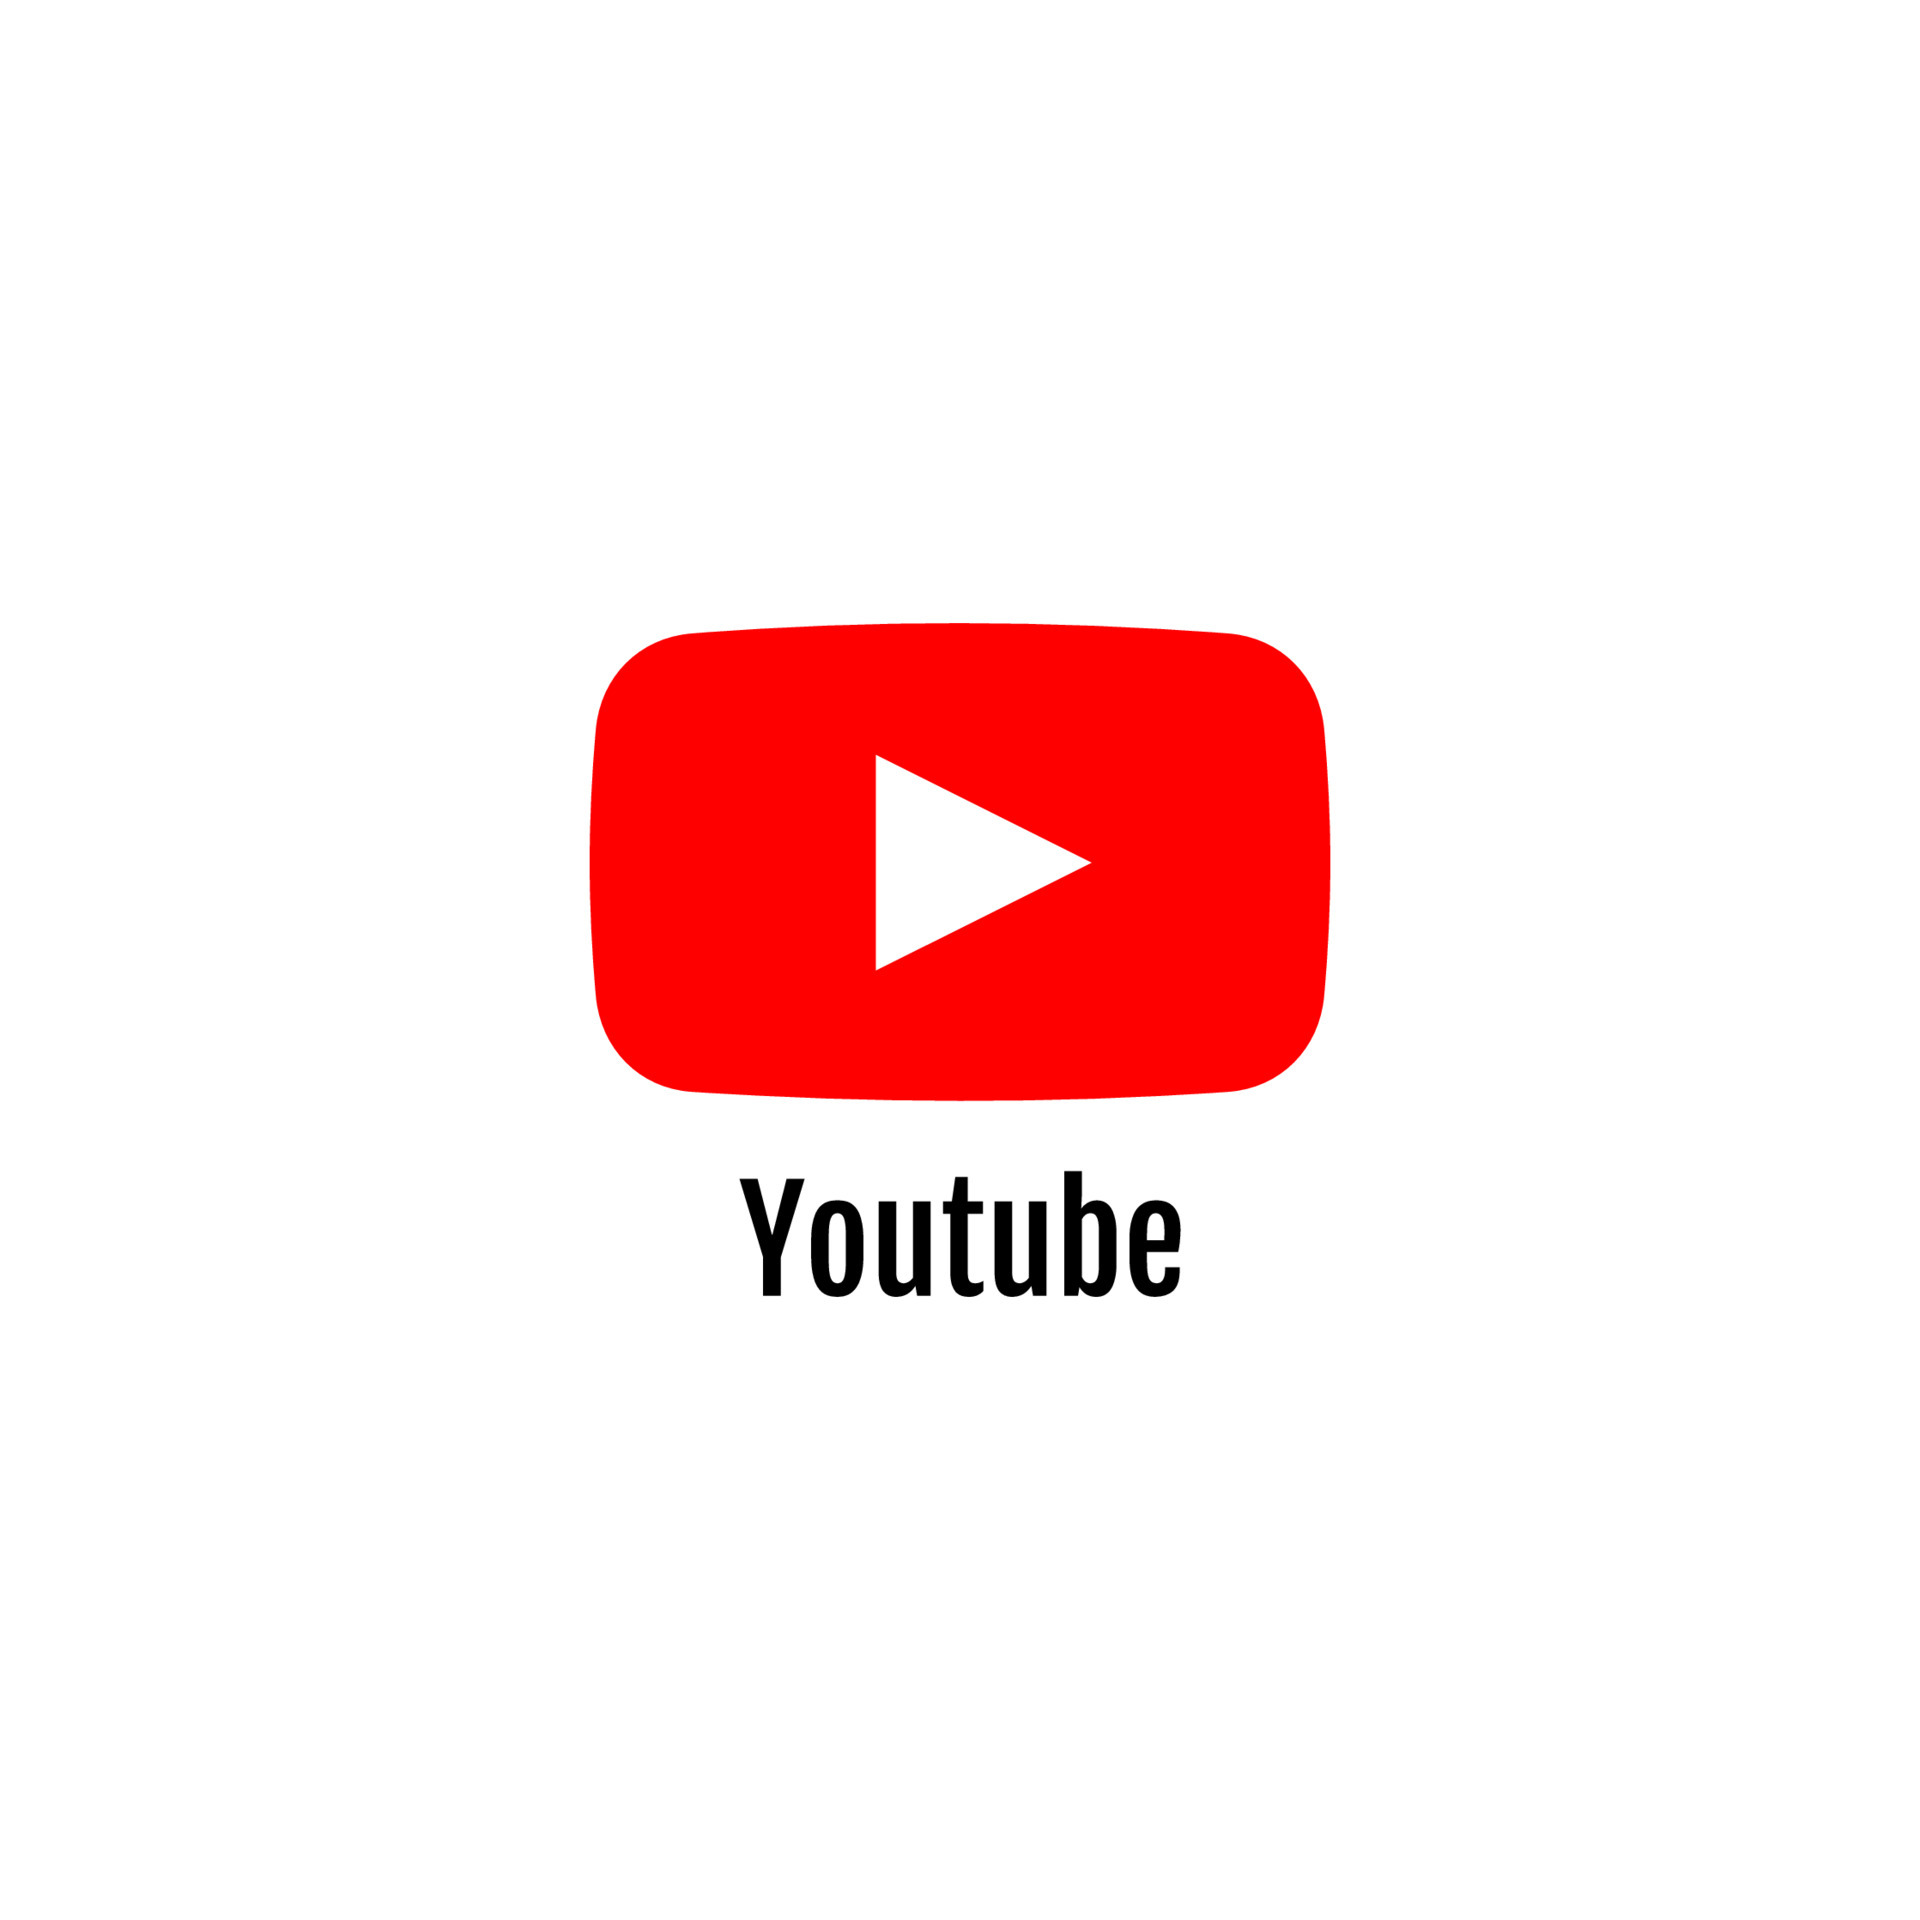 icône youtube, logo, symbole, icônes d\'applications éditoriales ...